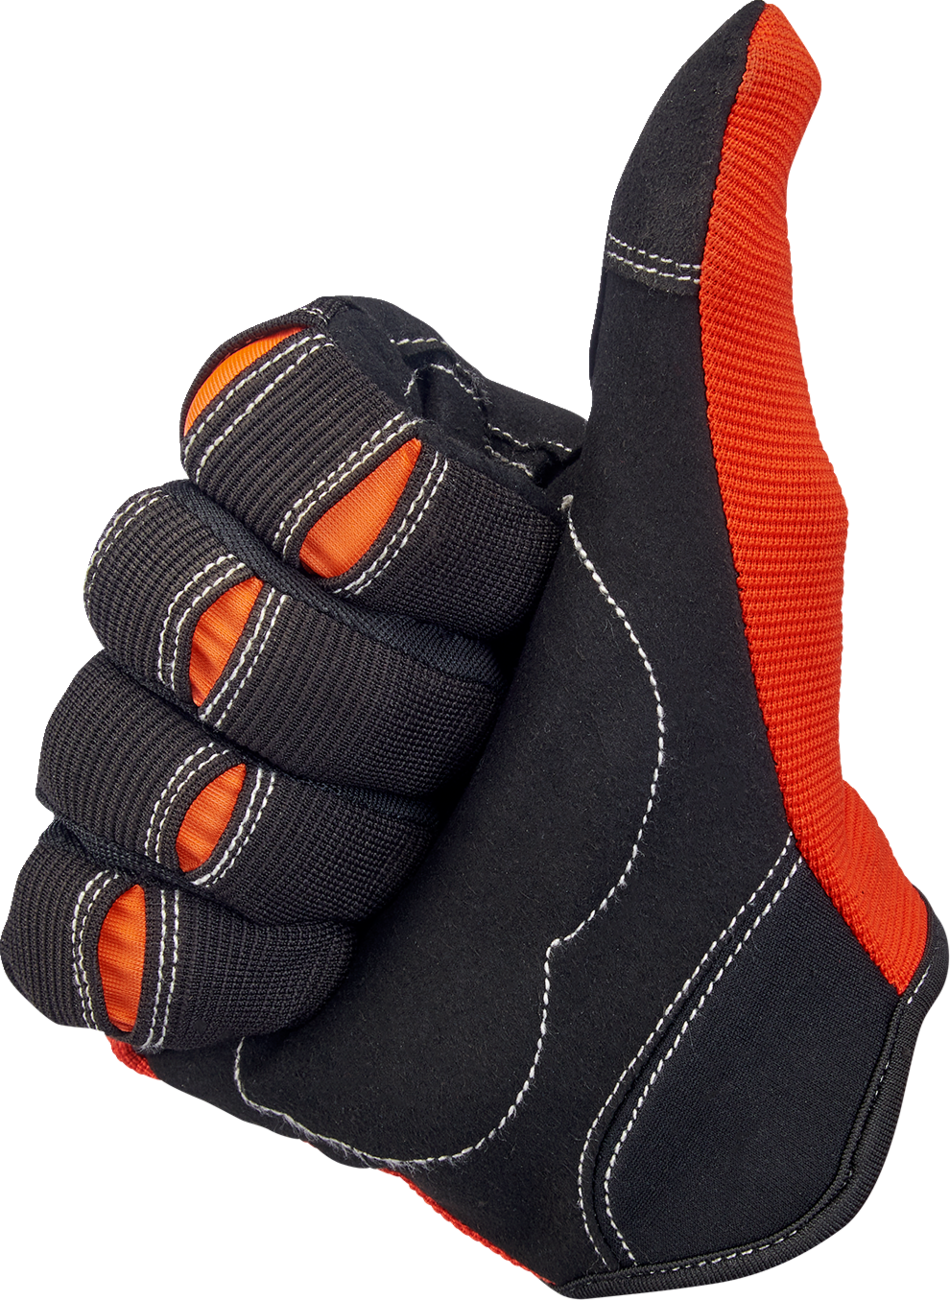 BILTWELL Moto Gloves - Orange/Black - Medium 1501-0106-003